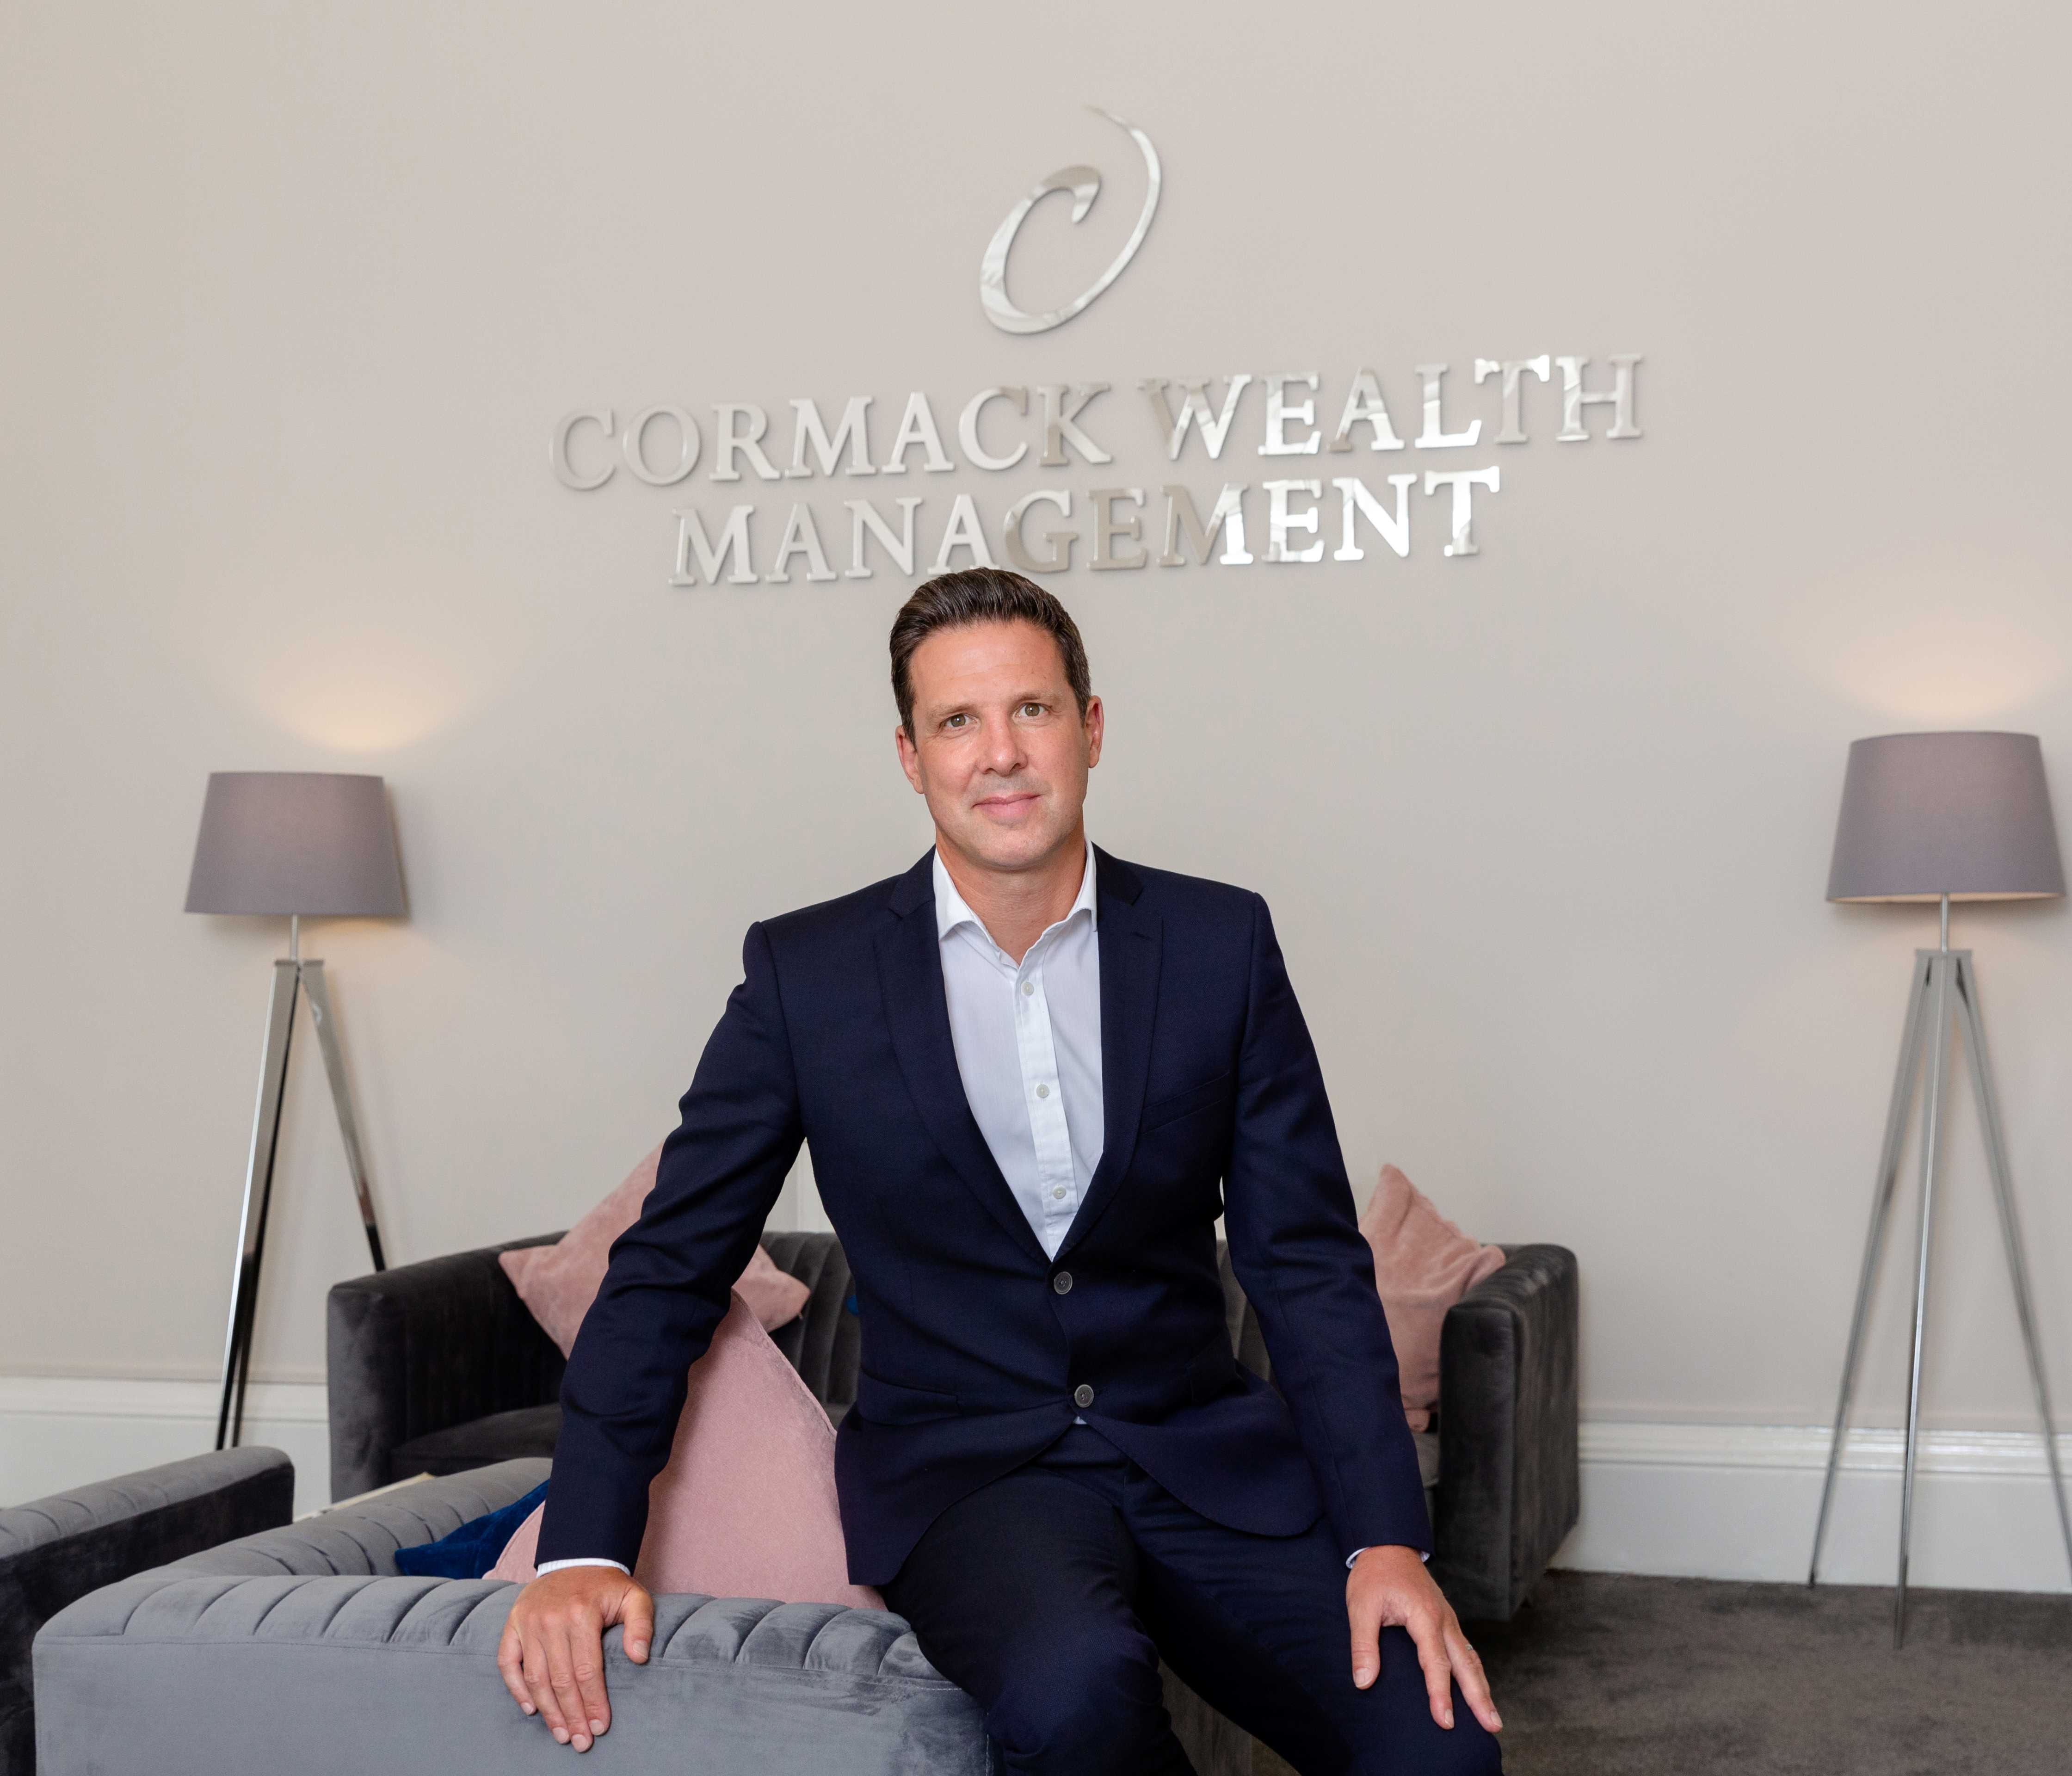 Cormack Wealth Management Limited